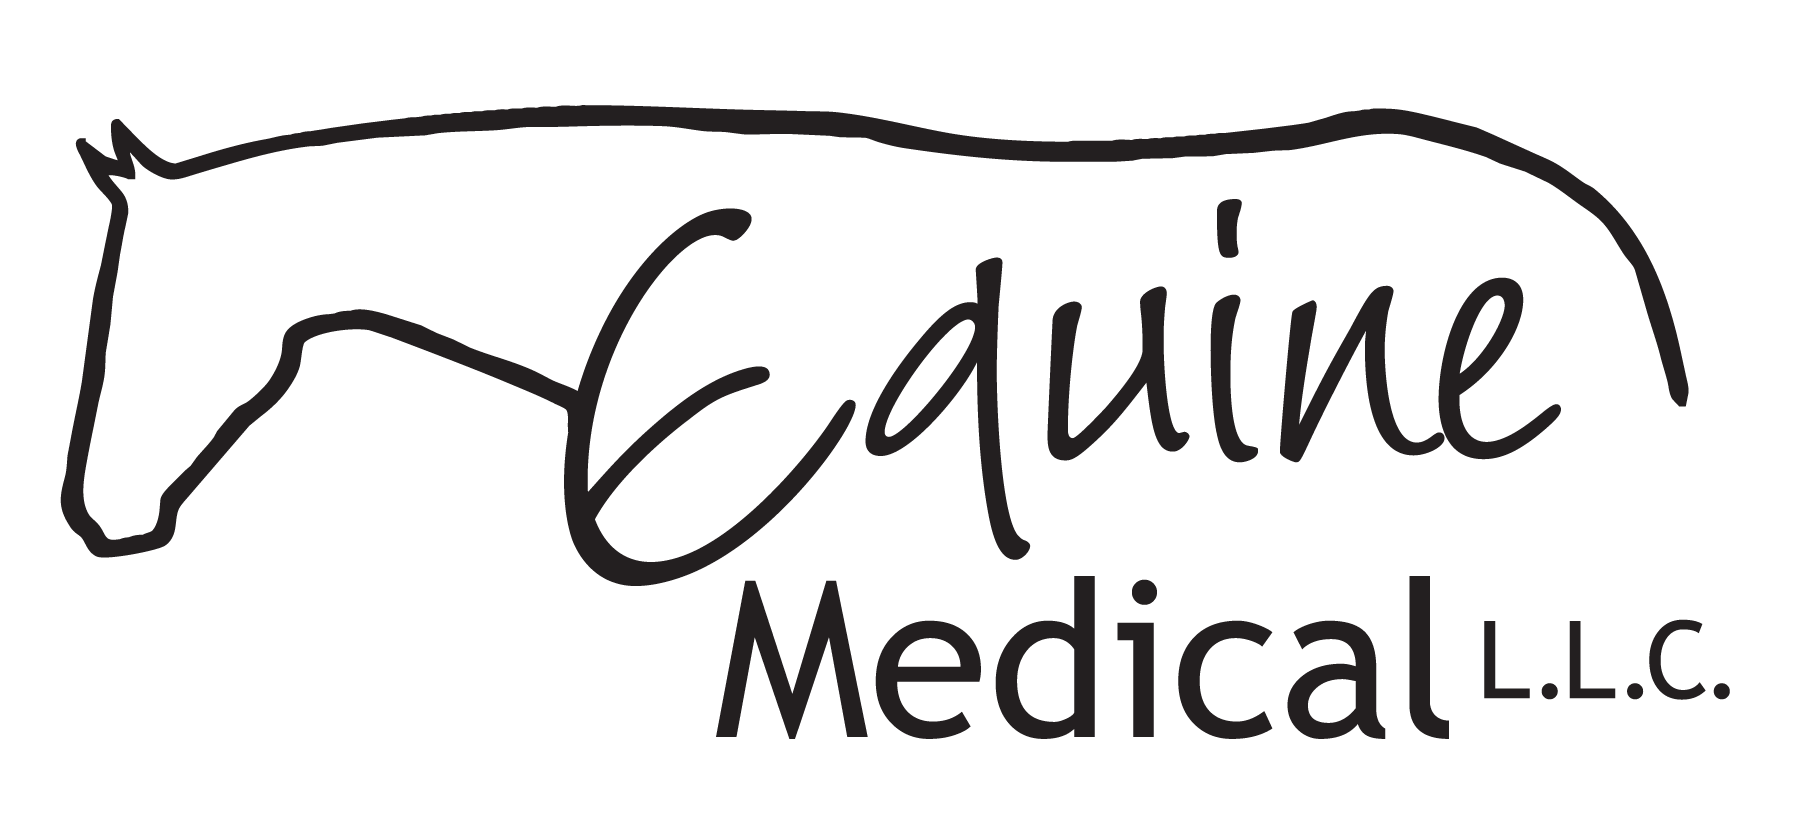 Equine Medical, LLC